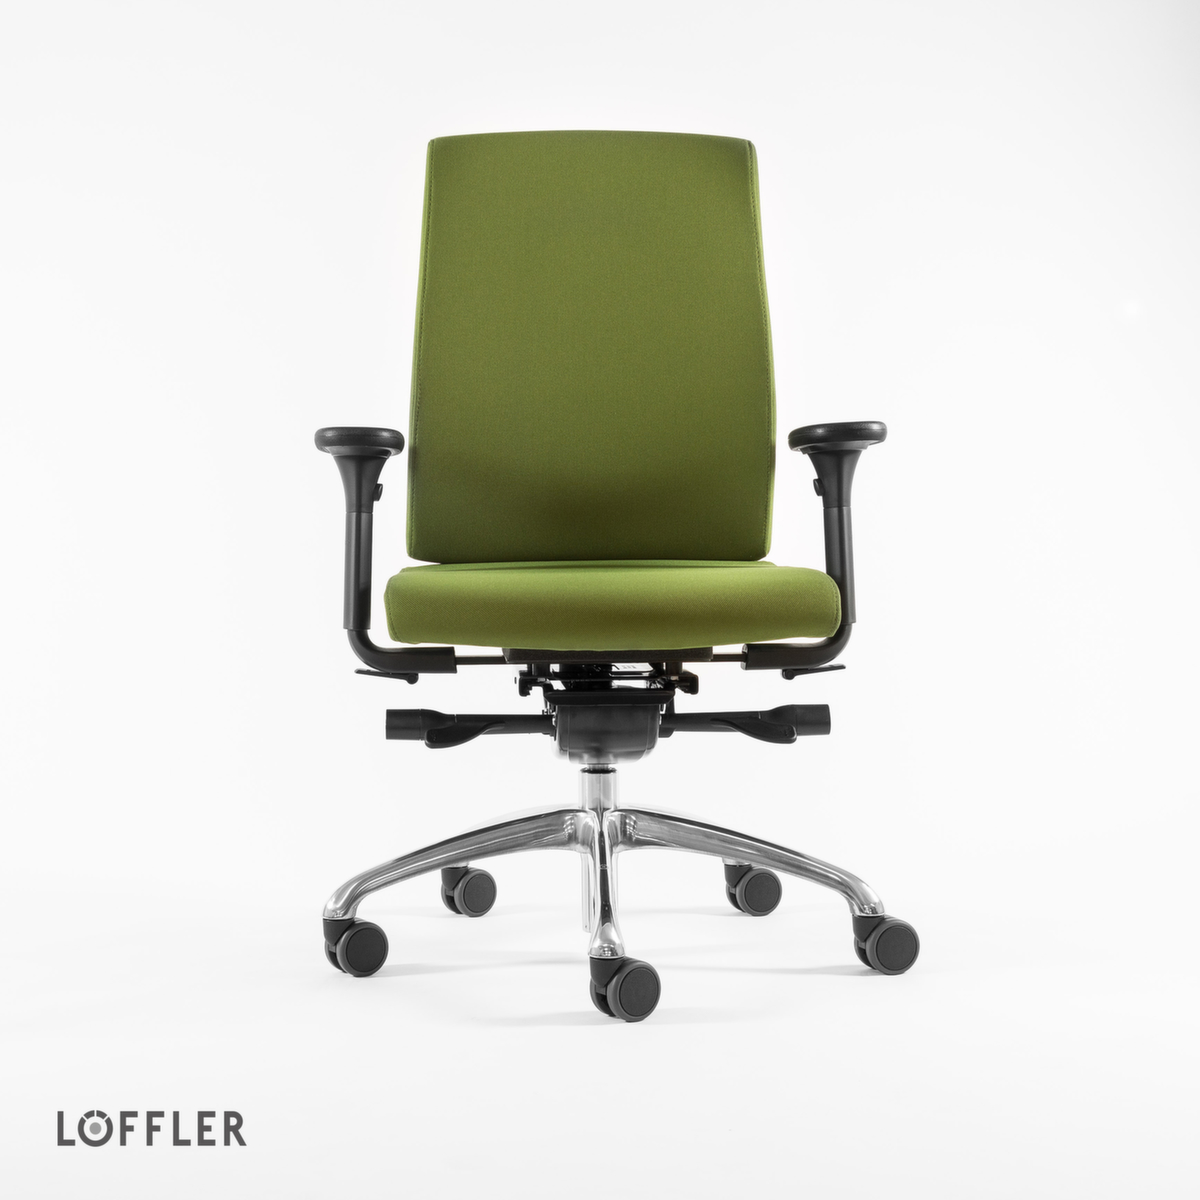 Löffler Drehstuhl Figo, grün Standard 2 ZOOM